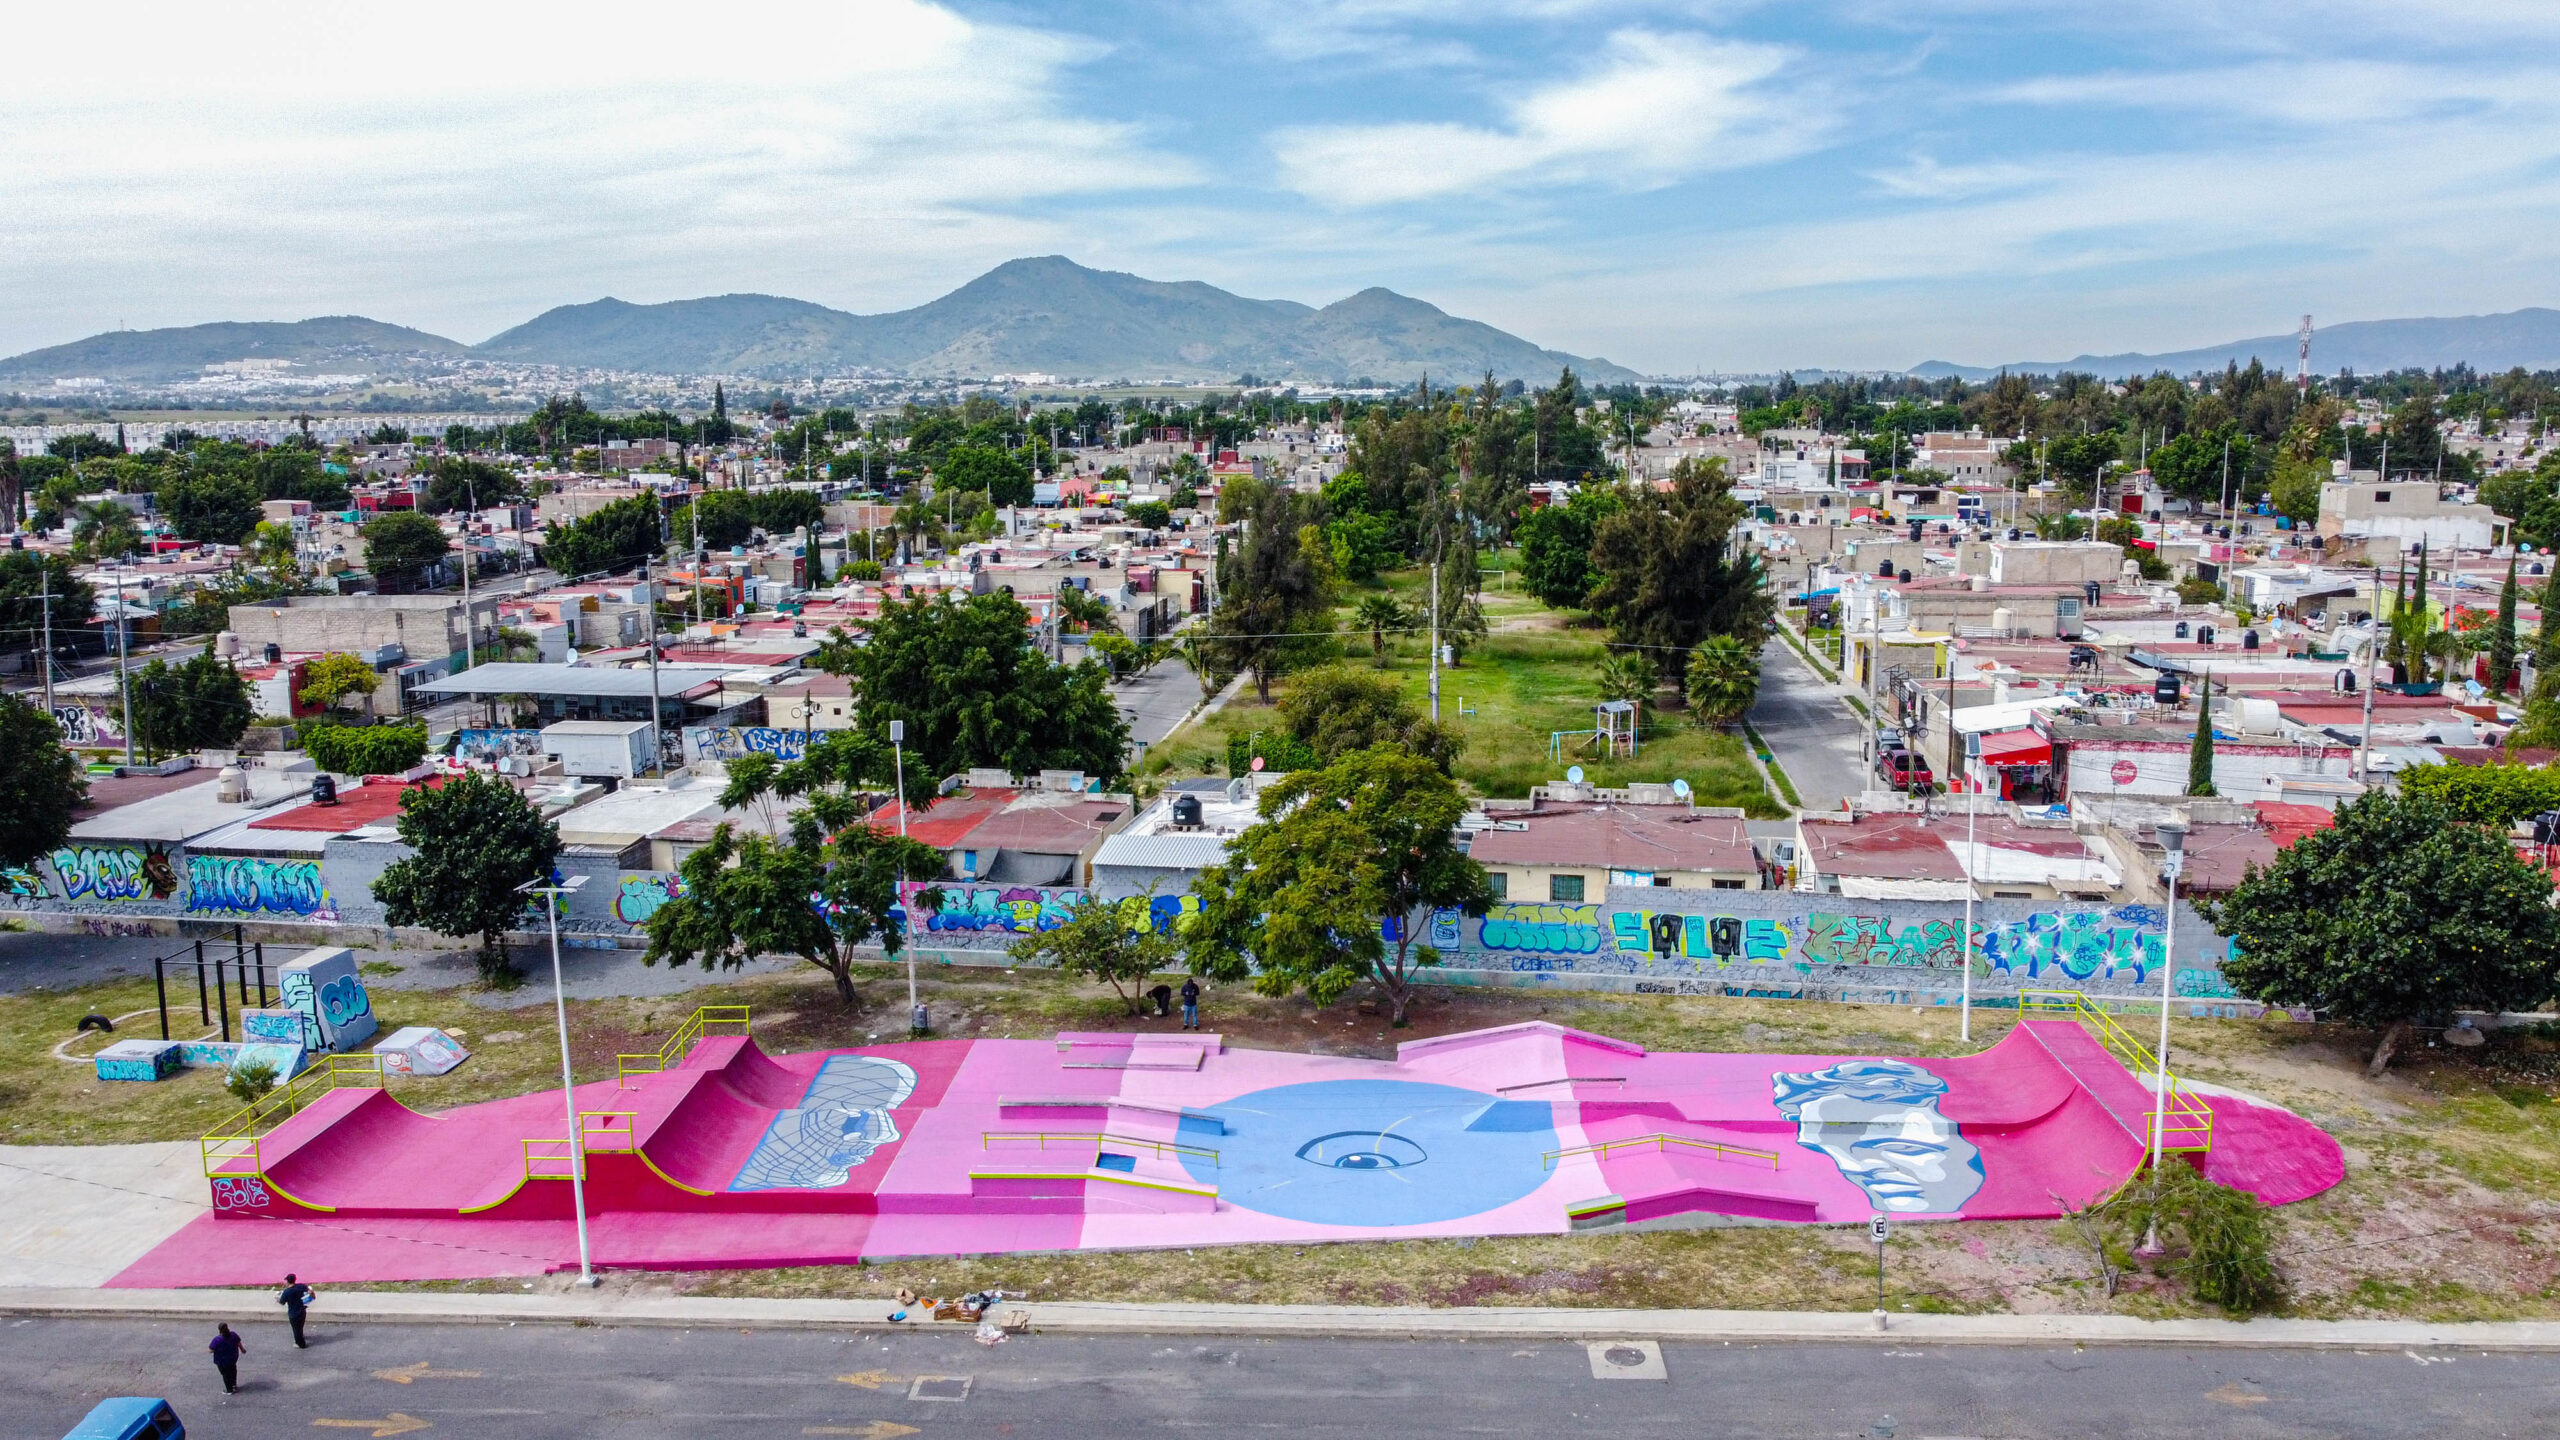 skatepark-tlajomulco-mejores-skateparks-mexico-lugares-para-patina-skate-pista-de-skate-en-mexico-pista-de-patinaje-en-tlajomulco-skatepark-la-union-skatepark-chula-vista-chiva-barrio